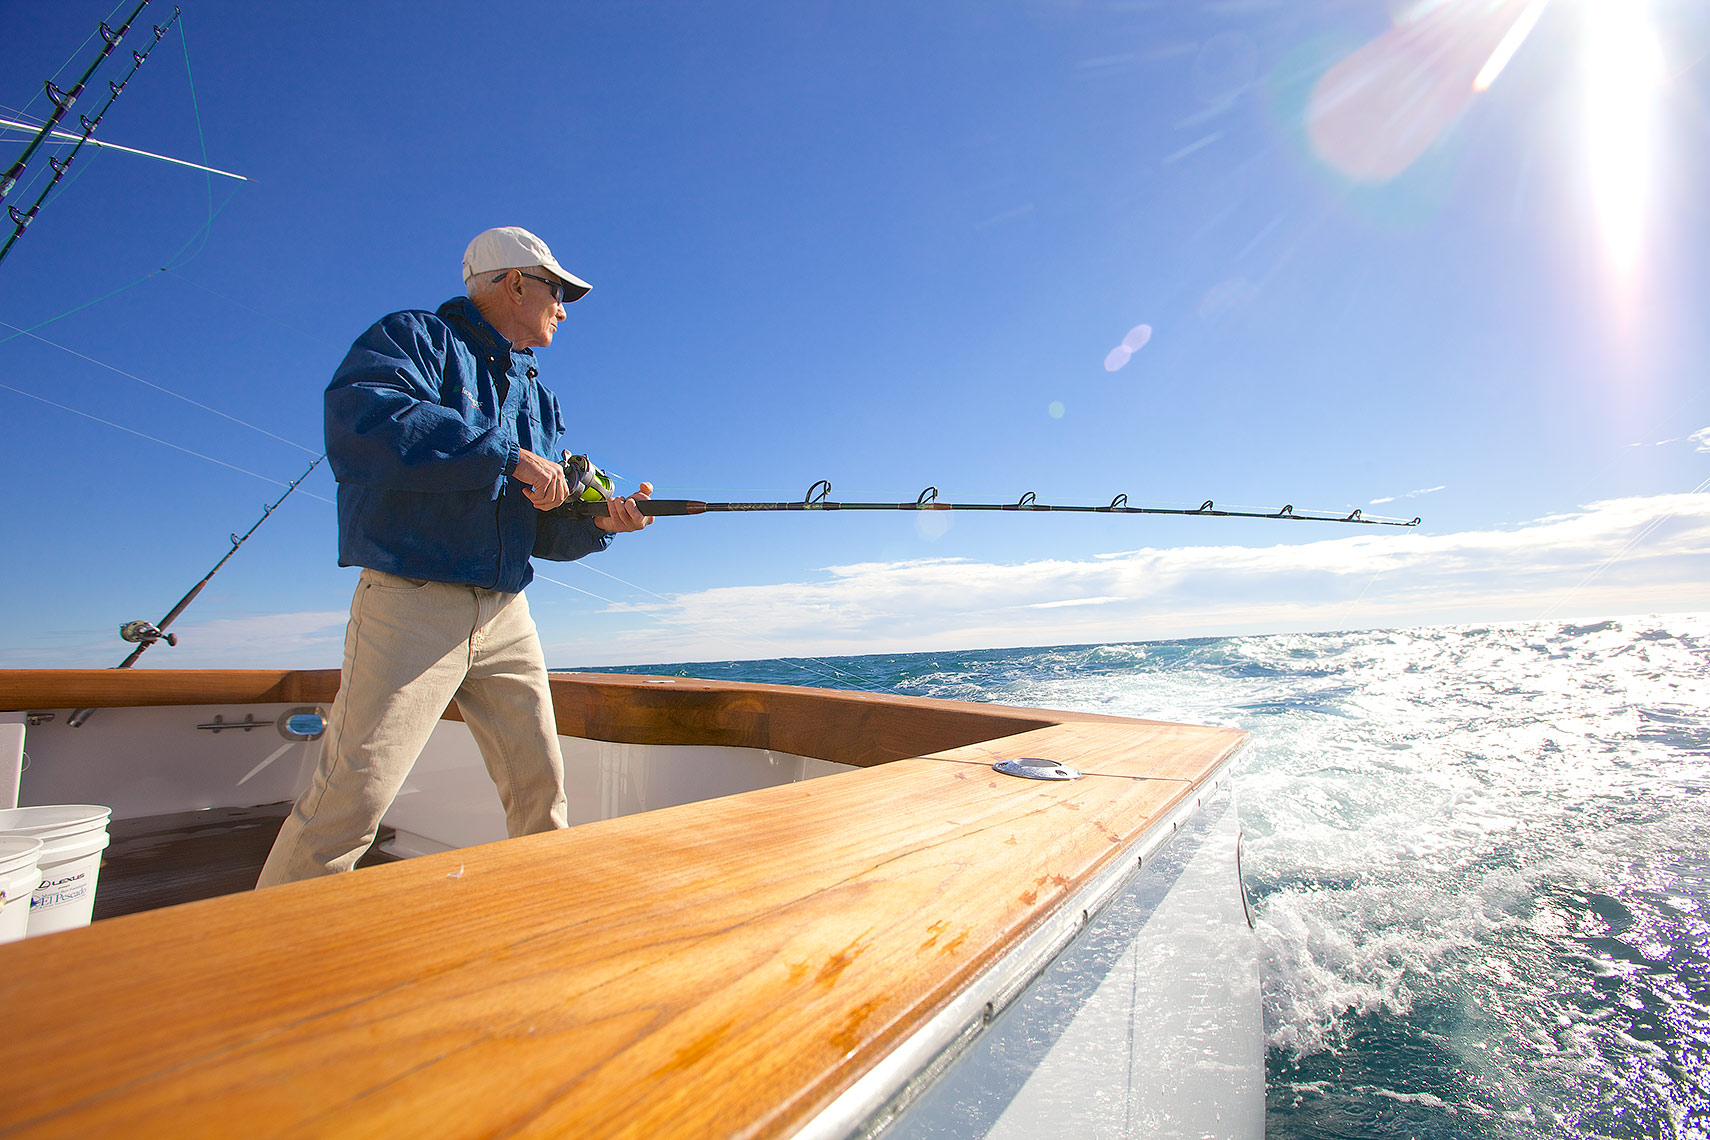 sportfishing-for-sailfish-twenty-miles-offshore-Florida-in-rough-seas-aboard-60-foot-yacht_Robert-Holland